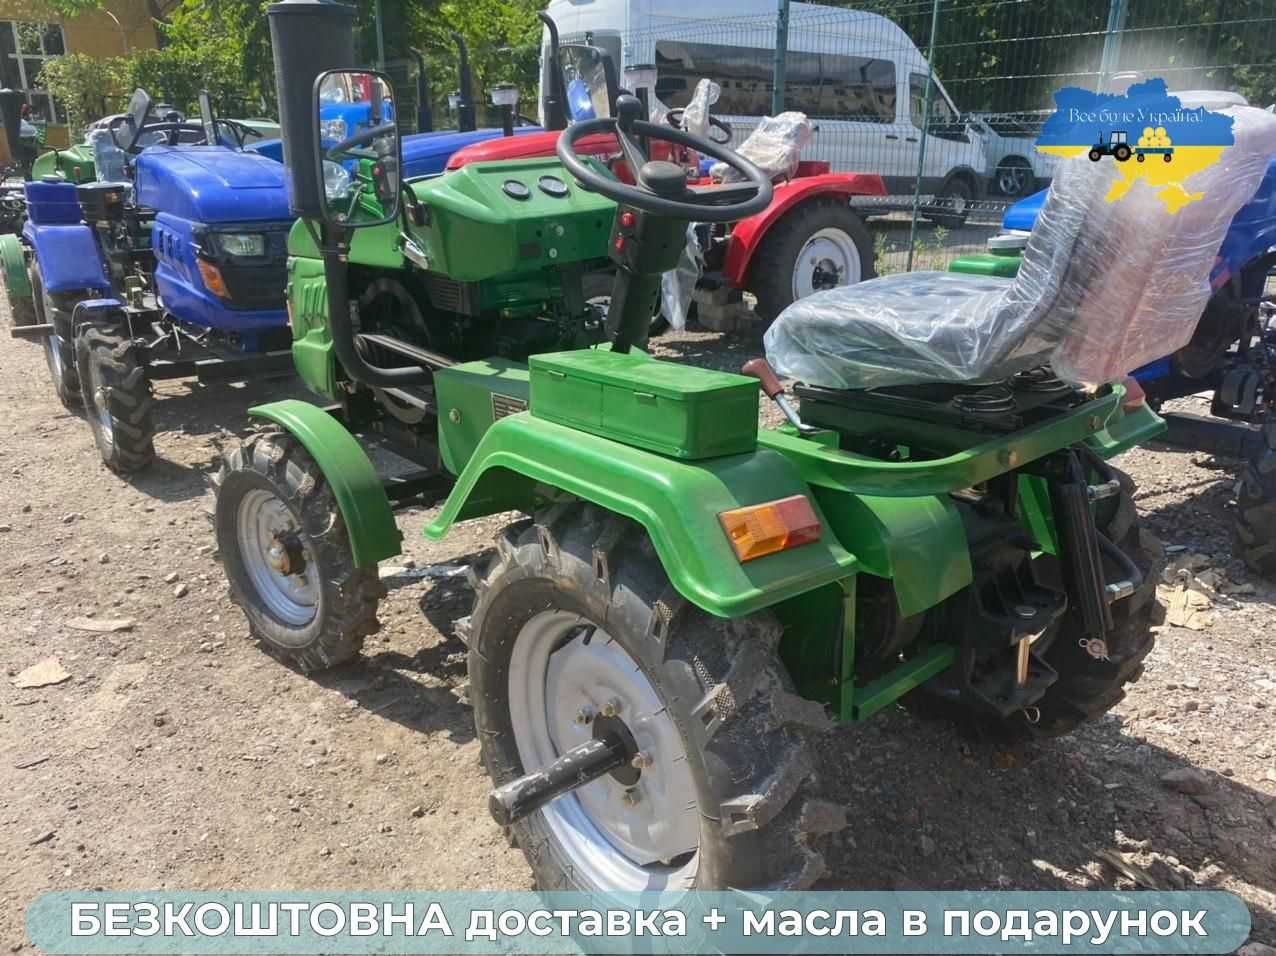 Трактор КЕНТАВР 160 ПРО, ФРЕЗА+ПЛУГ, бесплатная доставка МАСЛА